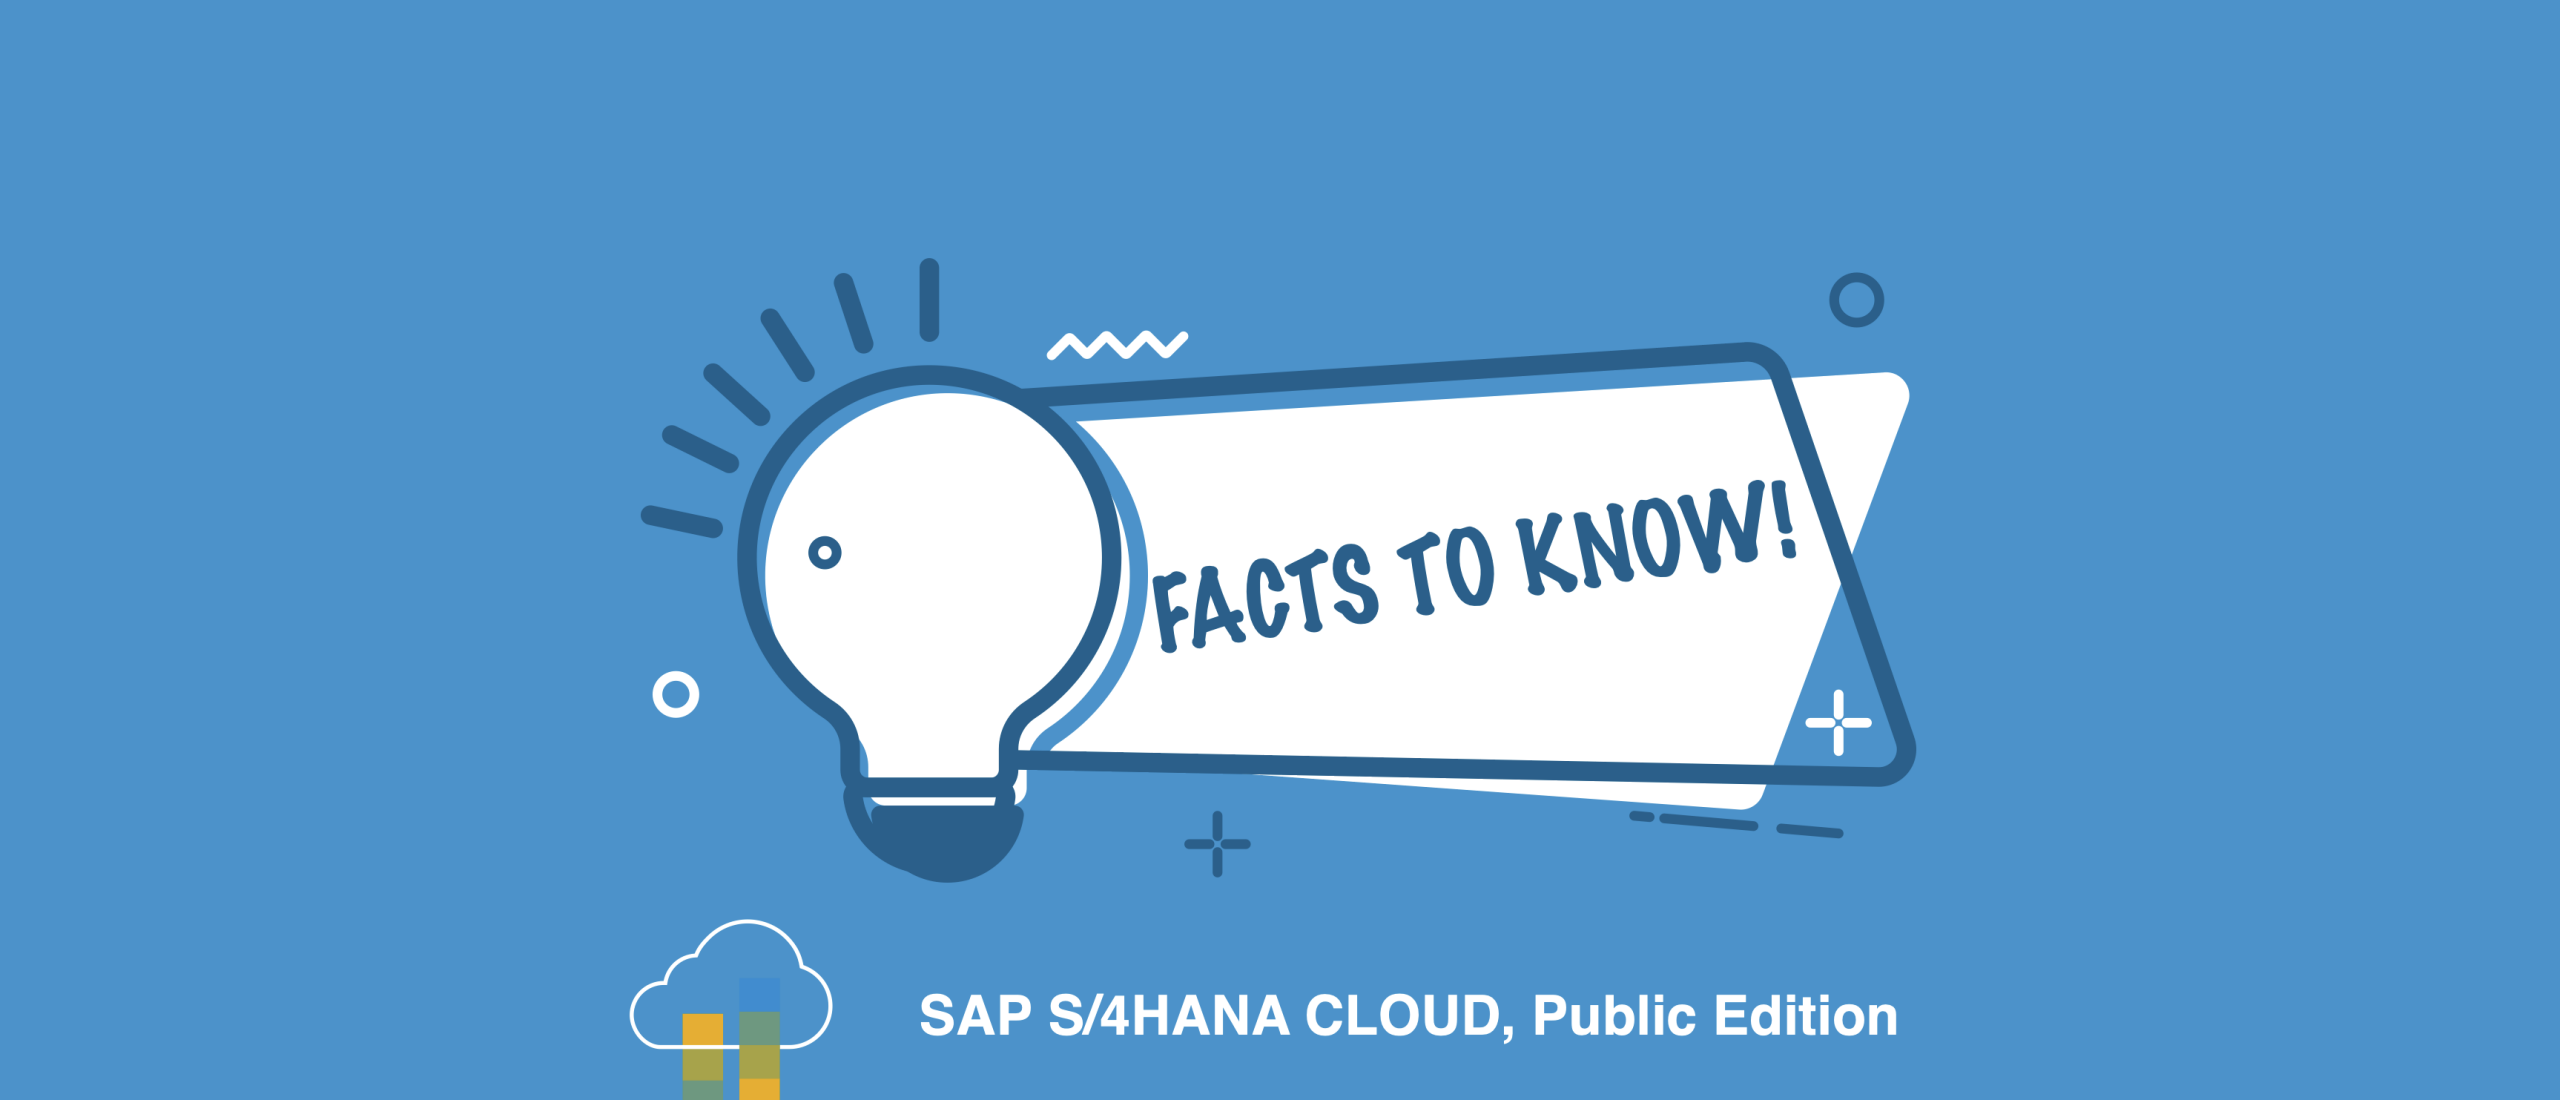 SAP S/4HANA Cloud Myths & Perception Blog